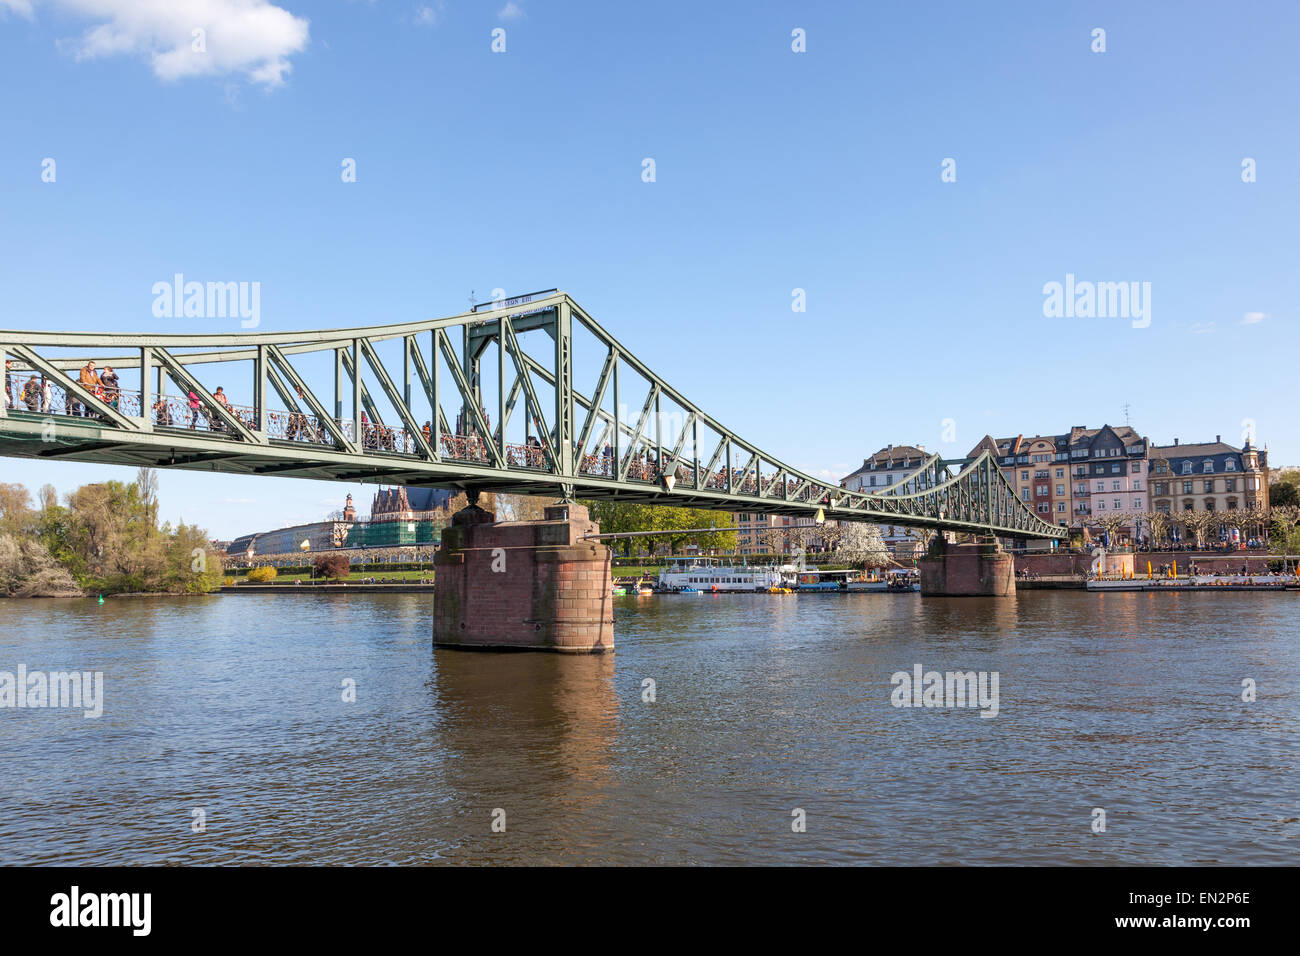 The Eiserne Steg - old iron bridge over the river Main in Frankfurt Main, Germany Stock Photo